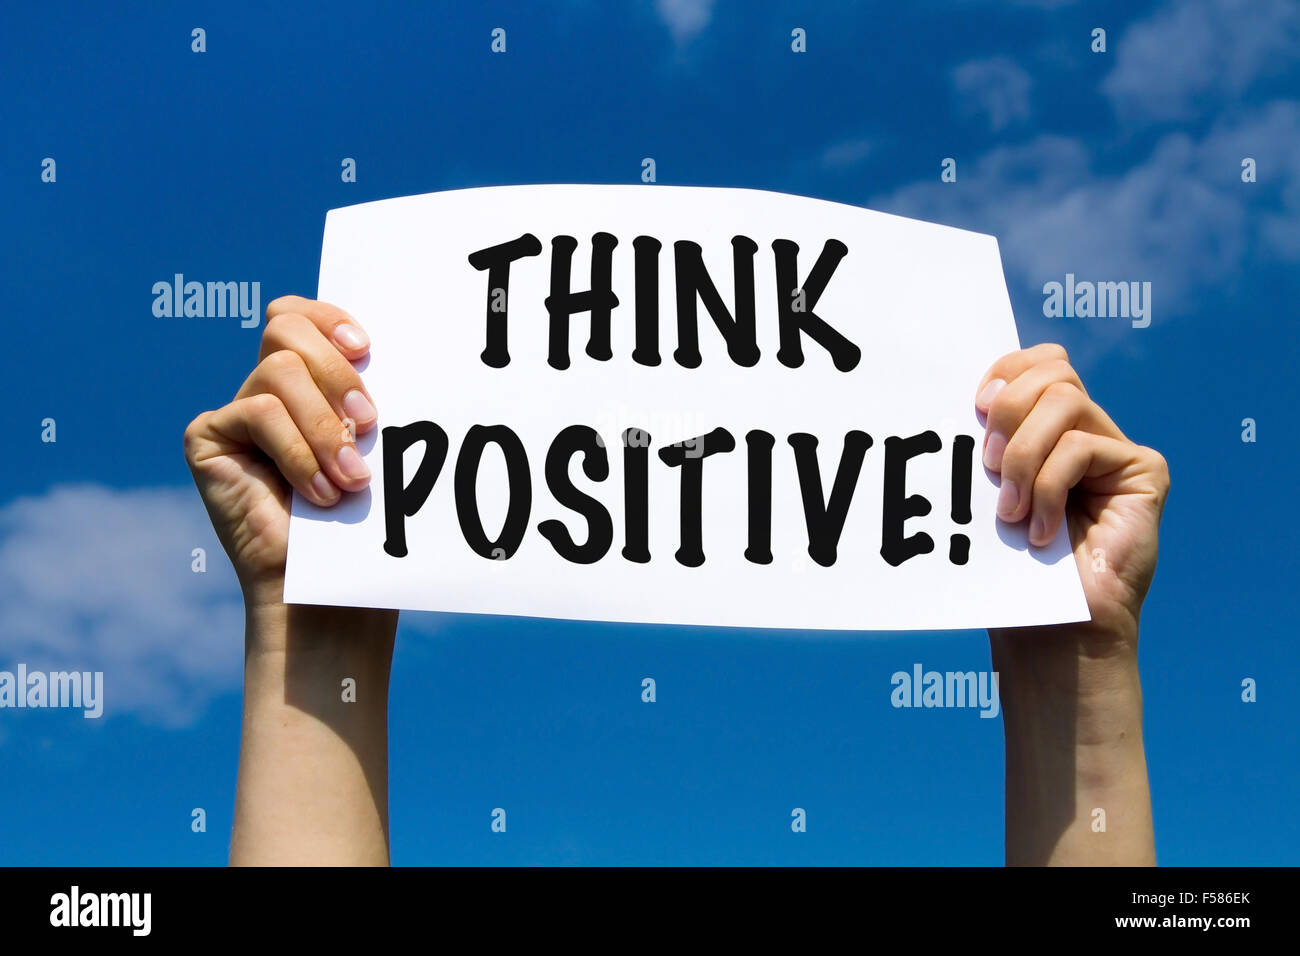 think positive Stock Photo